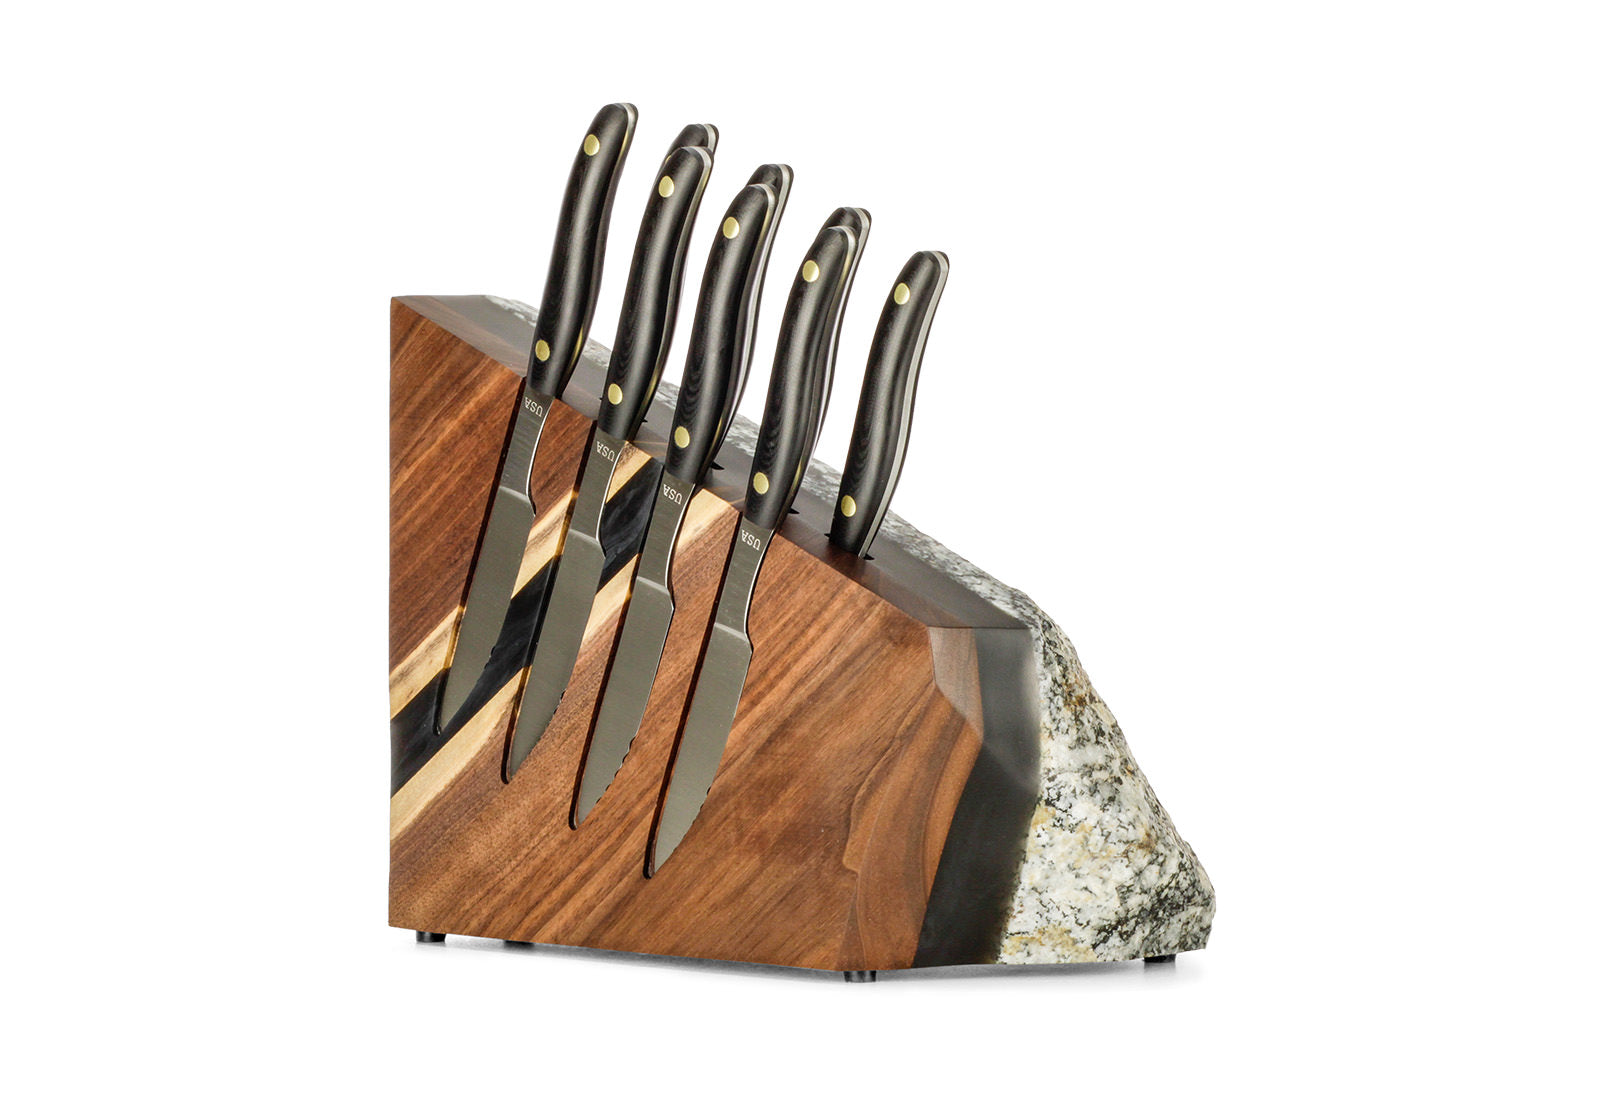 RUSTIC RANCH STEAK KNIFE BLOCK & SIX STEAK KNIVES – The Cowboys' Kitchen